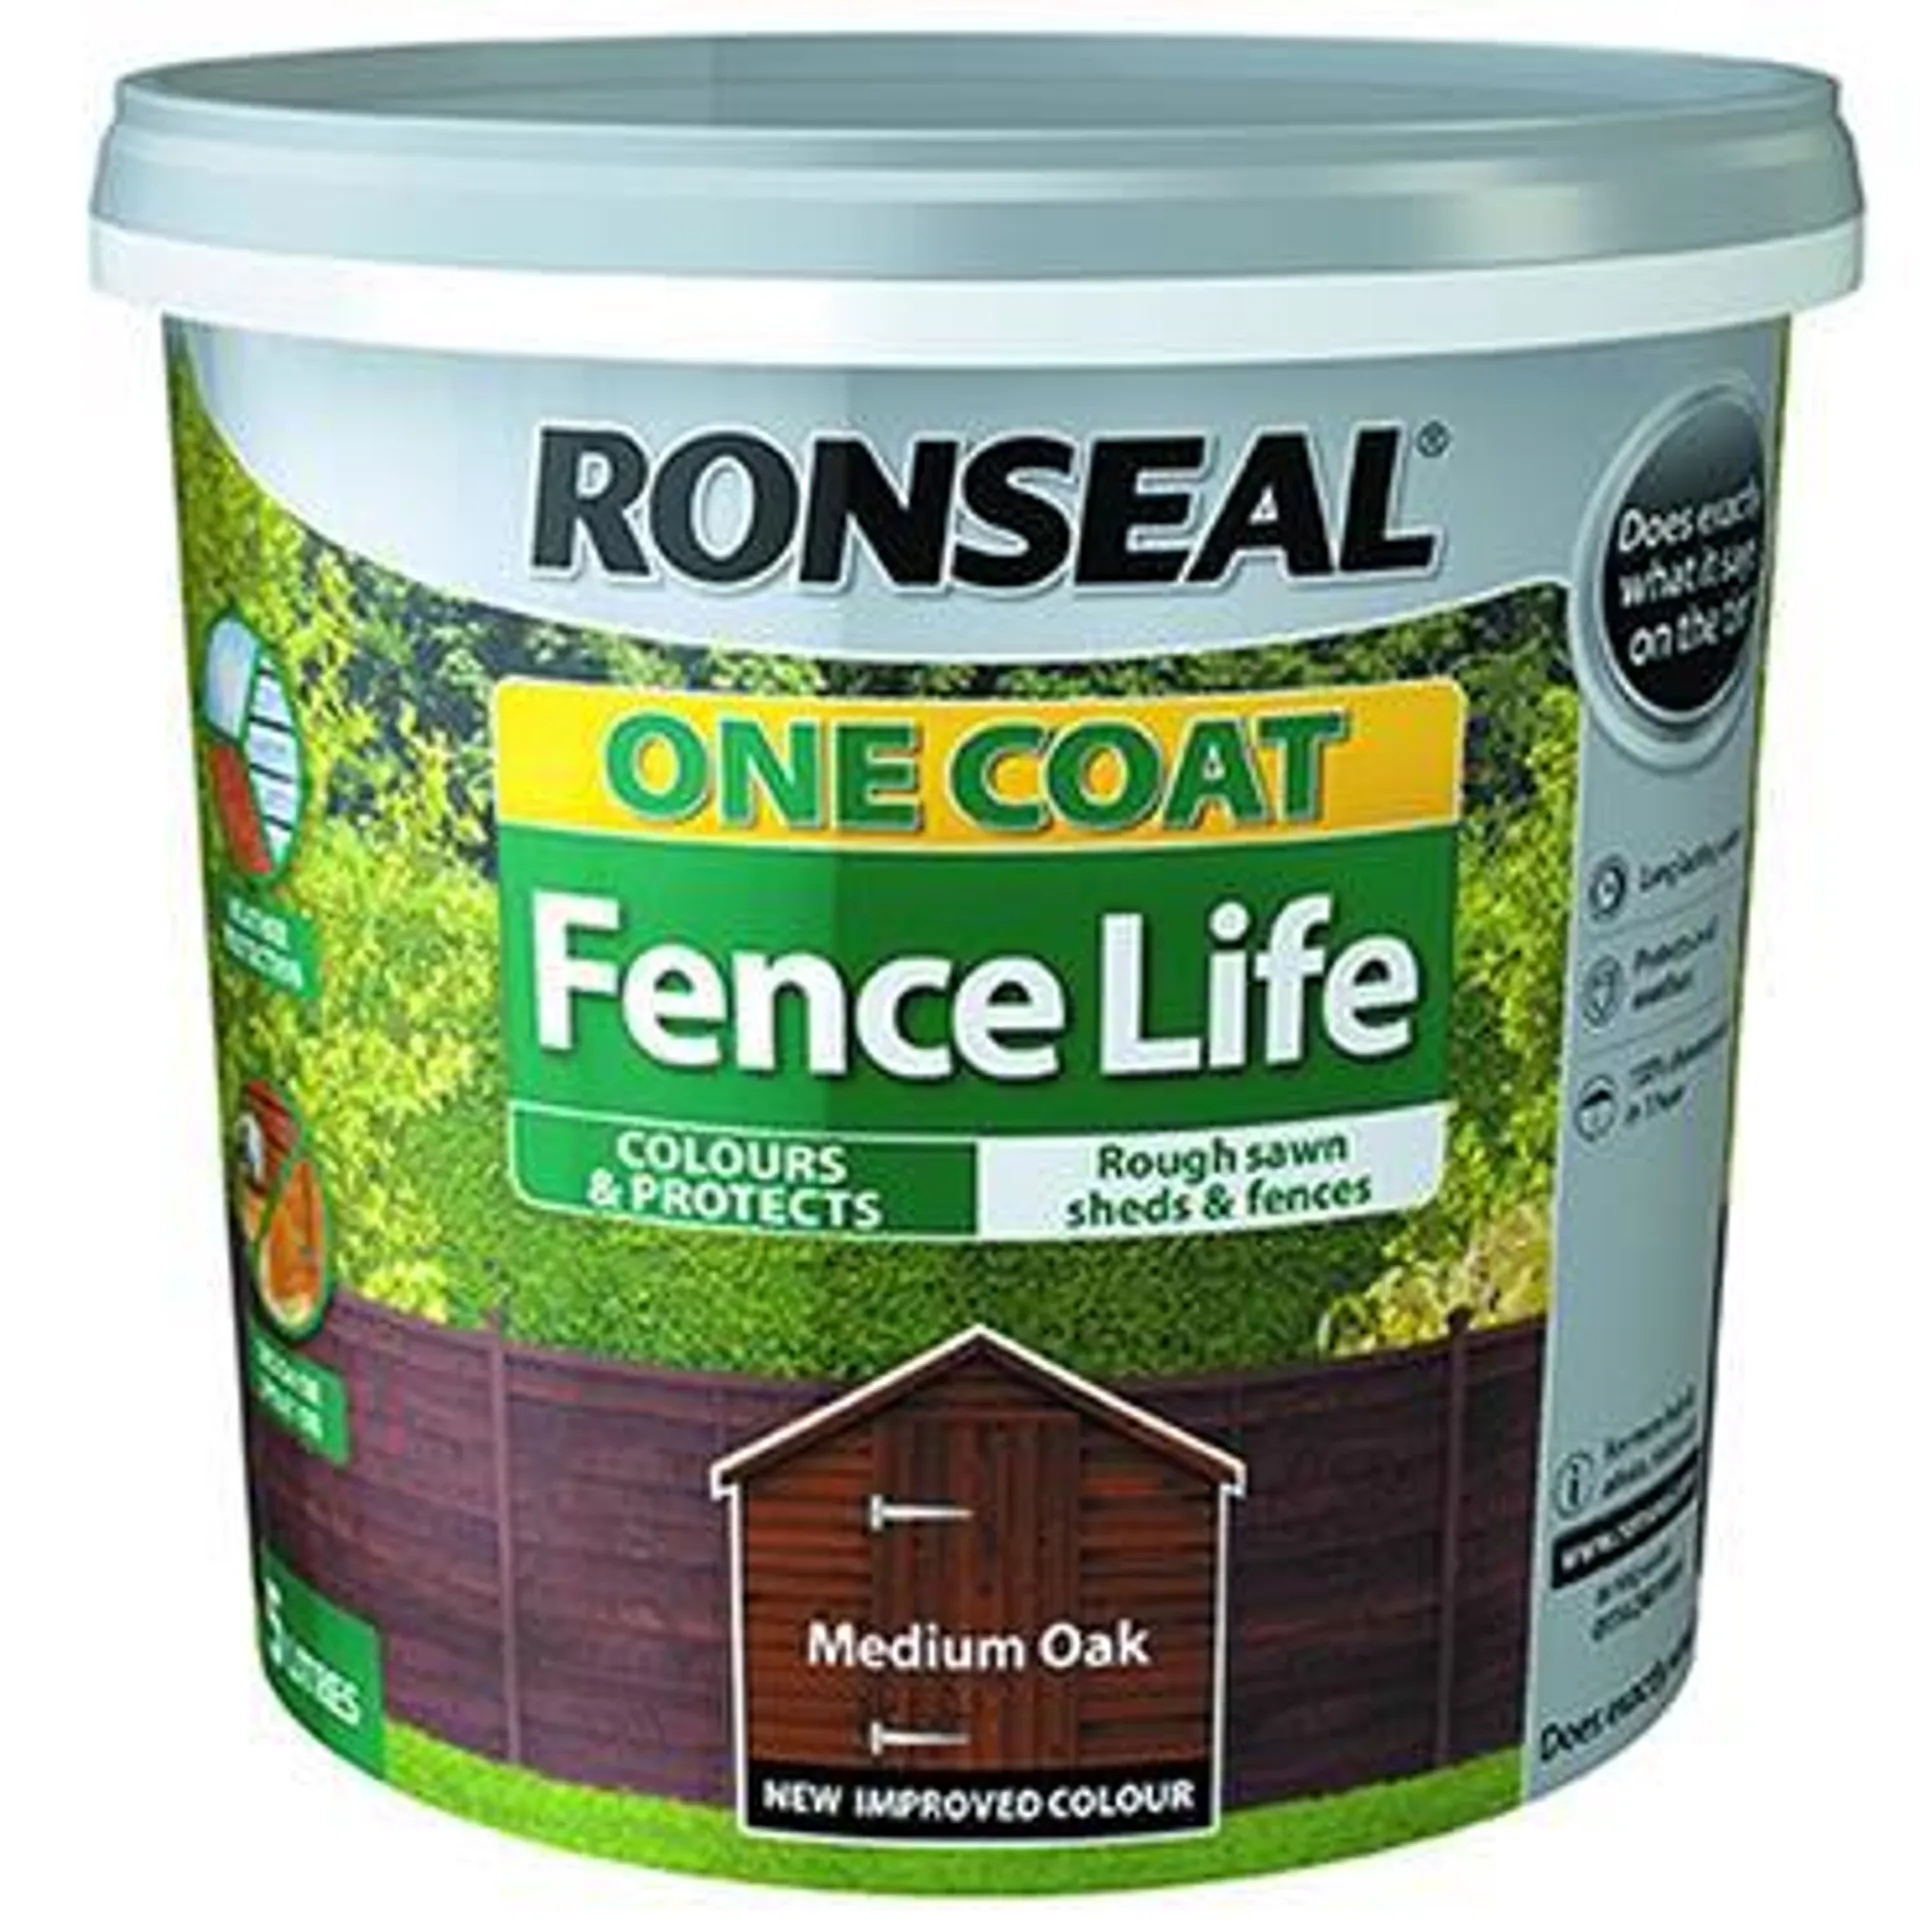 One Coat Fencelife Paint 5L - Medium Oak